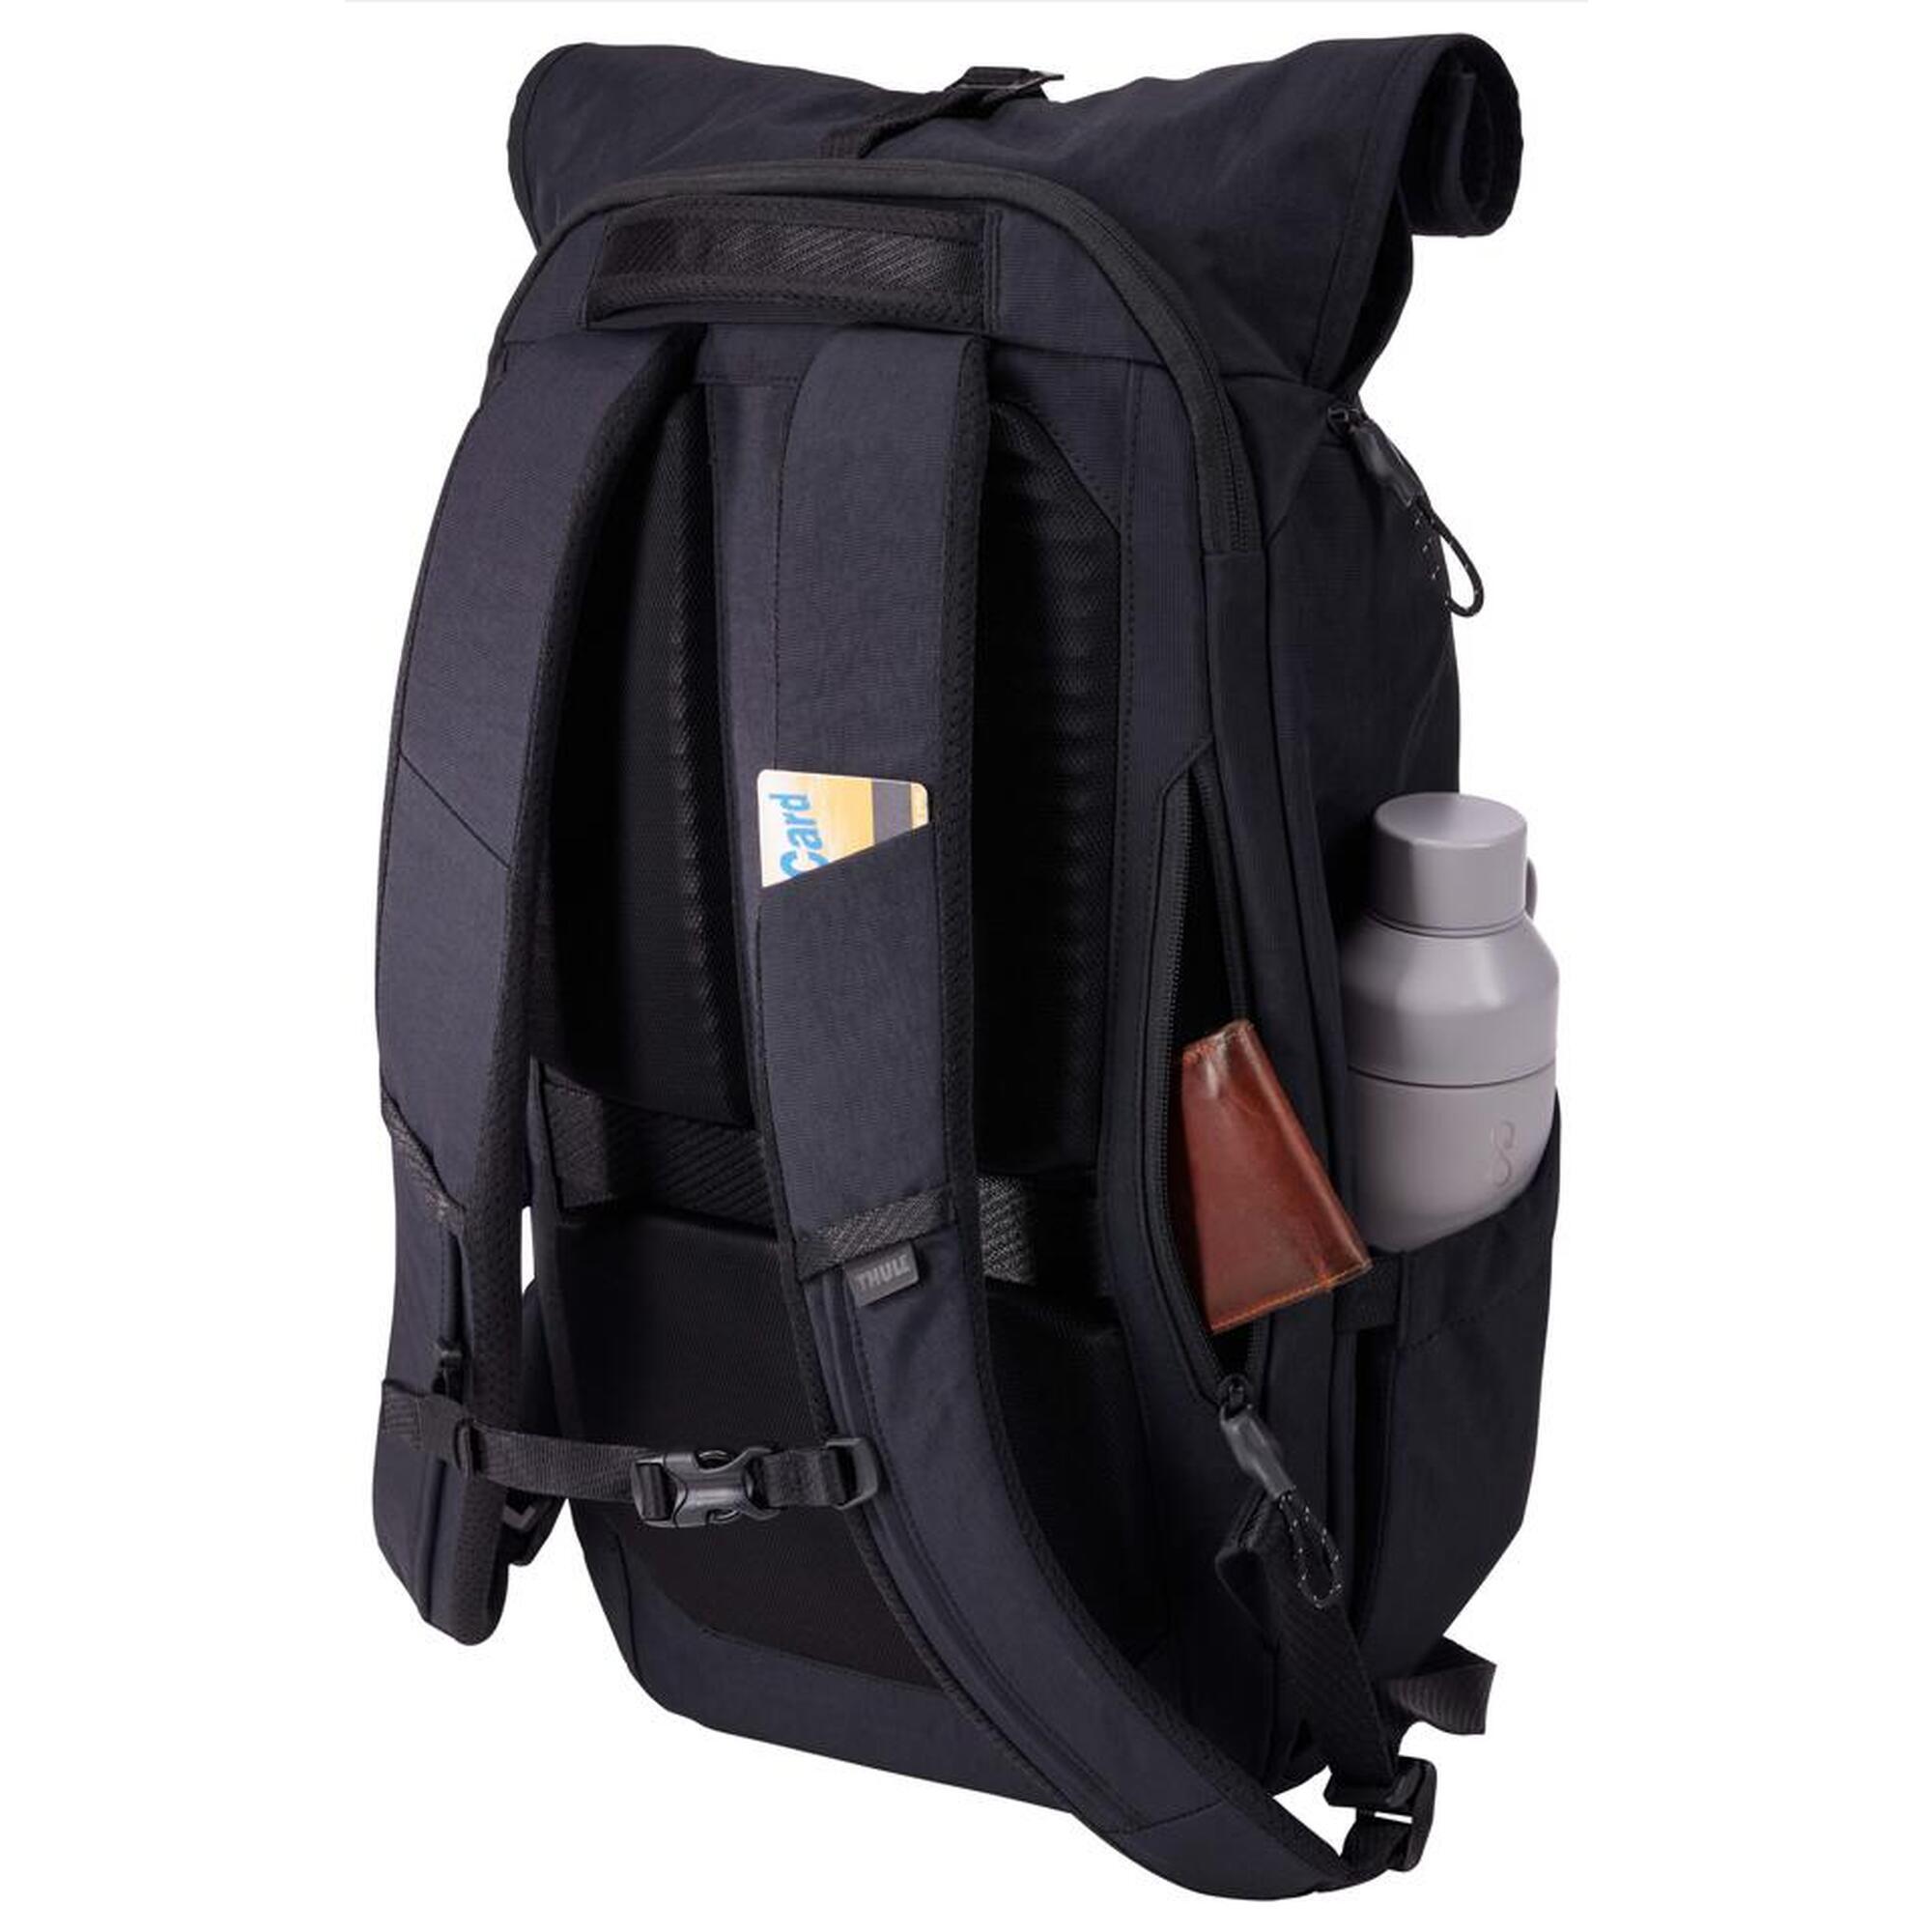 Paramount laptop backpack 24L - Black